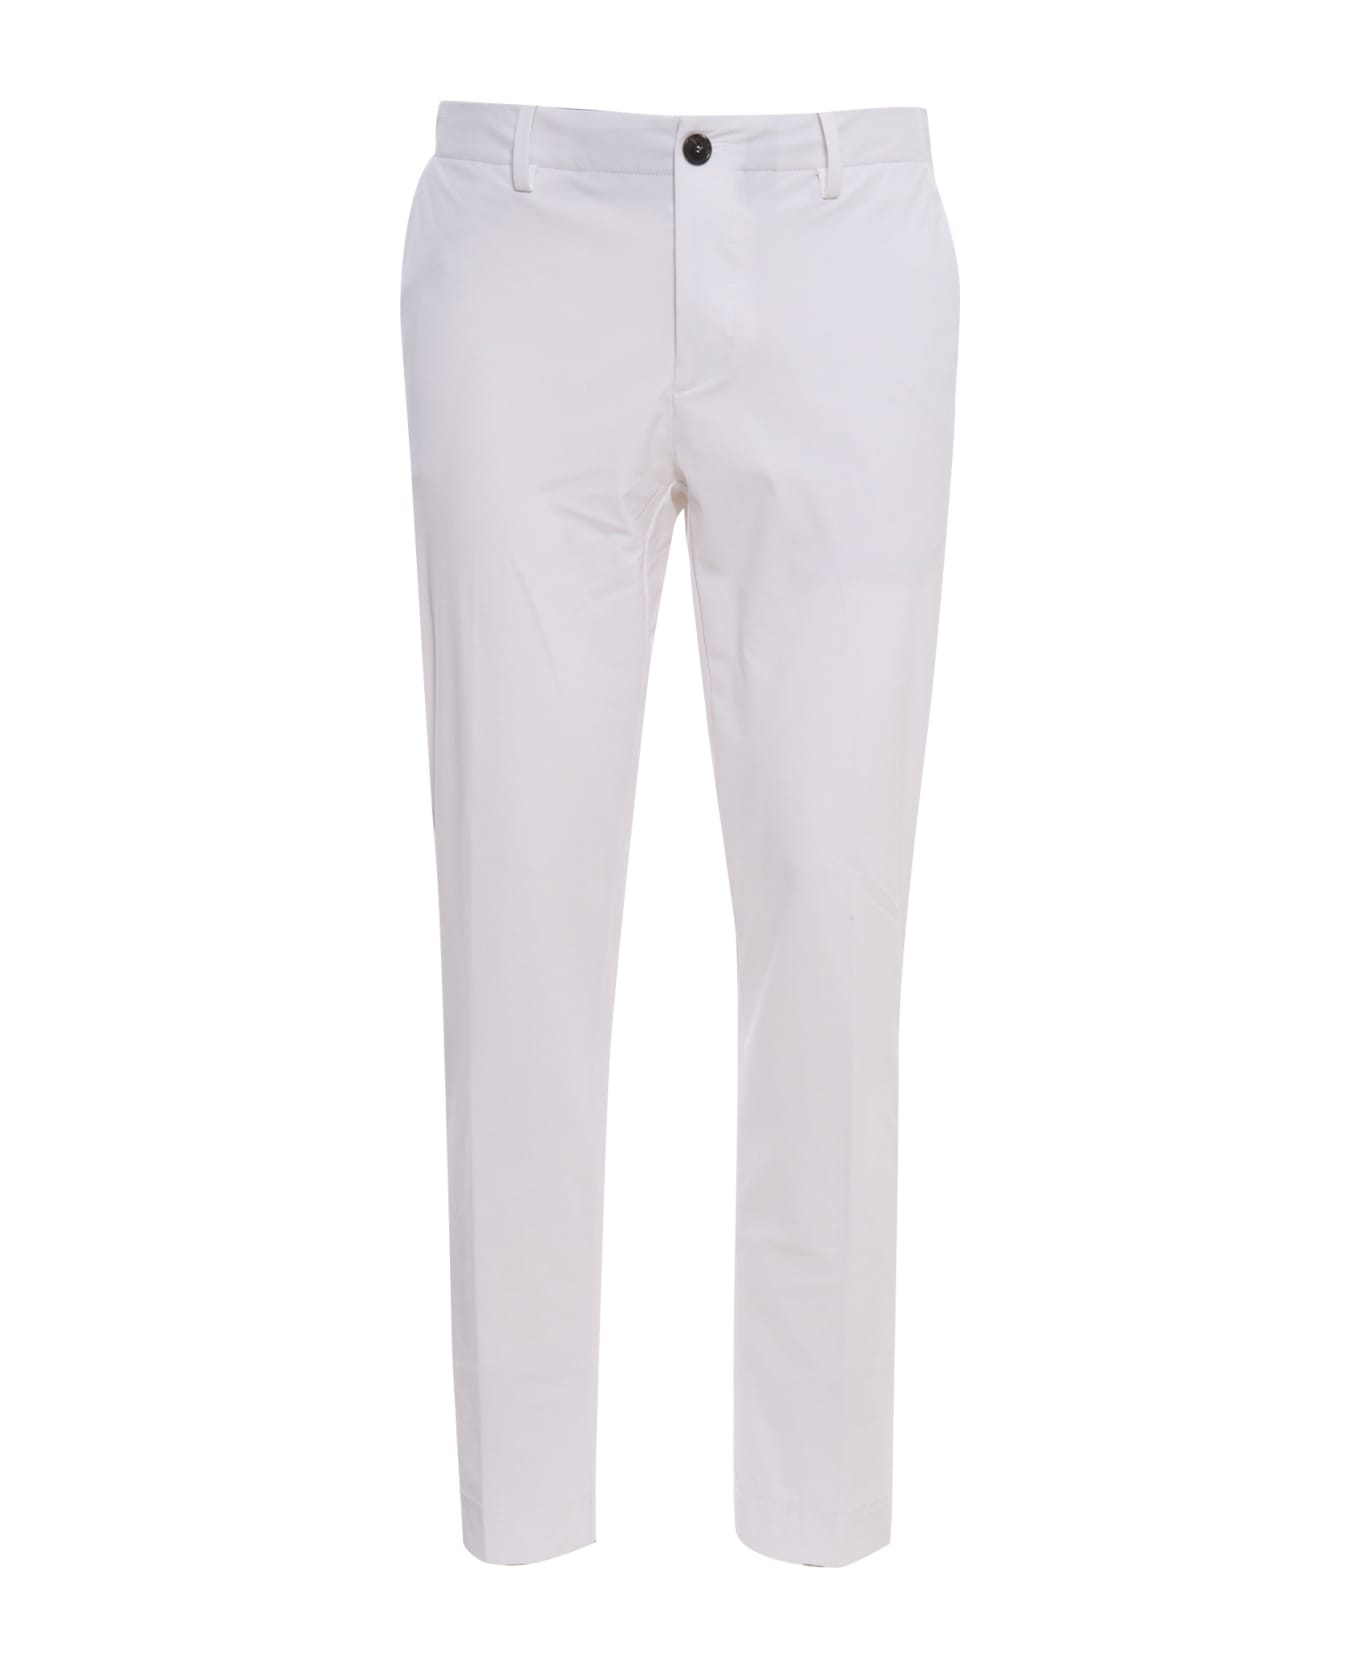 RRD - Roberto Ricci Design White Chino Trousers - WHITE